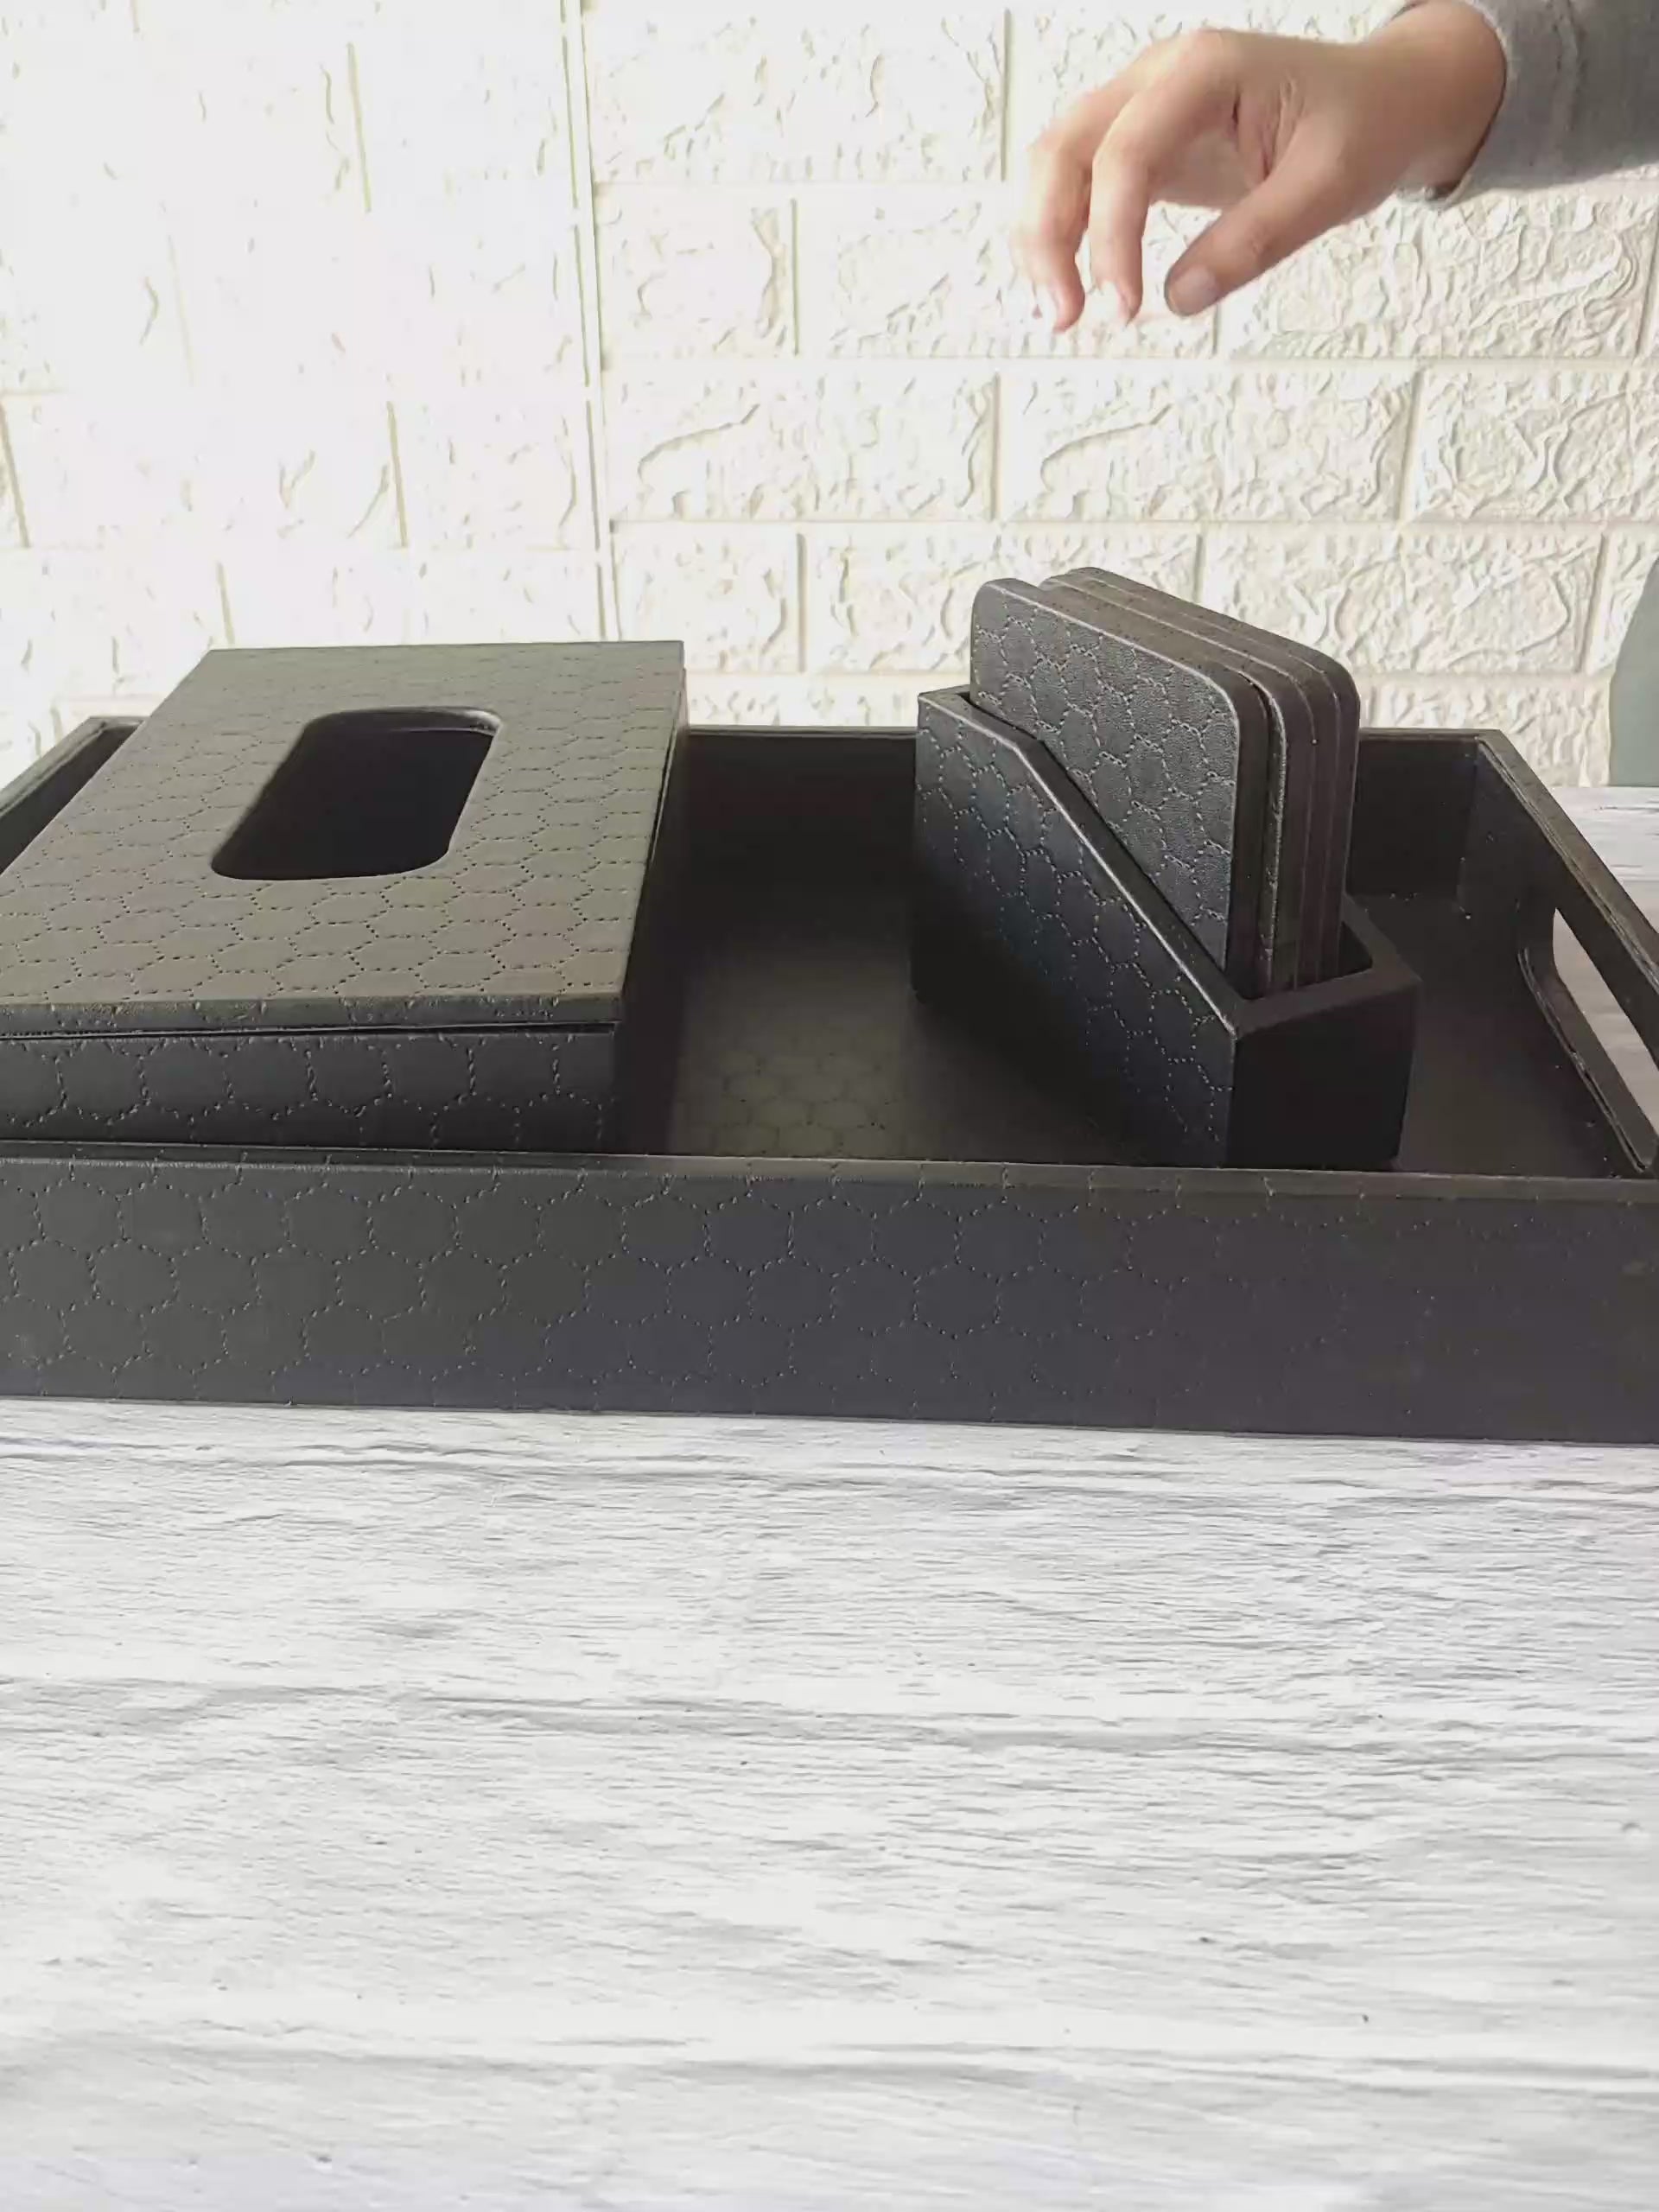 Black Stitched Premium Leather tissue box